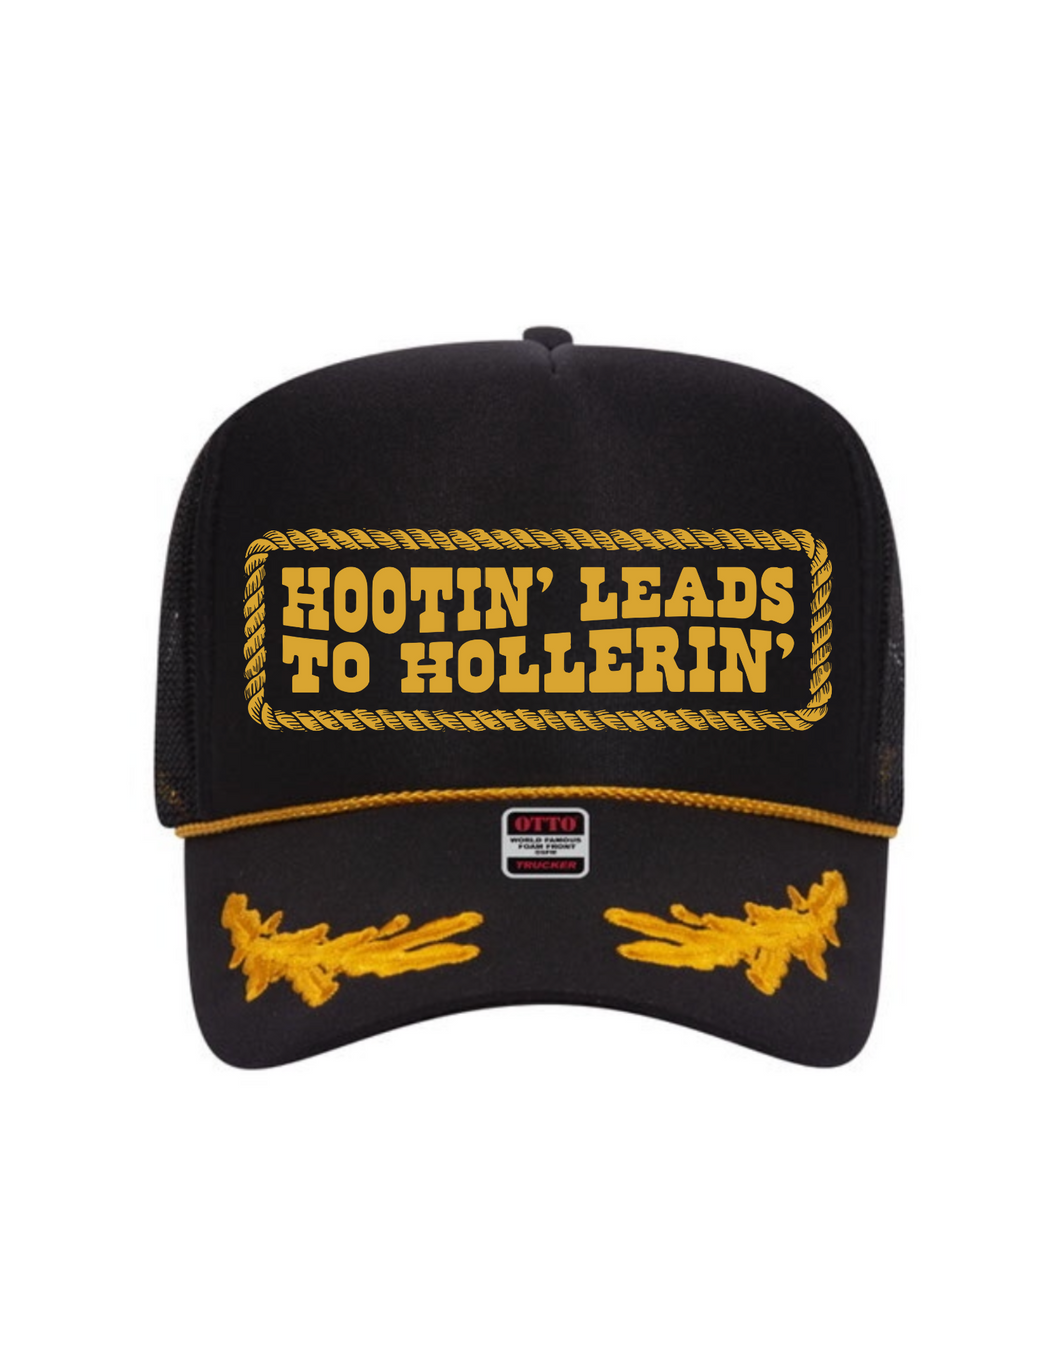 Hootin' Leads to Hollerin' - Trucker Hat